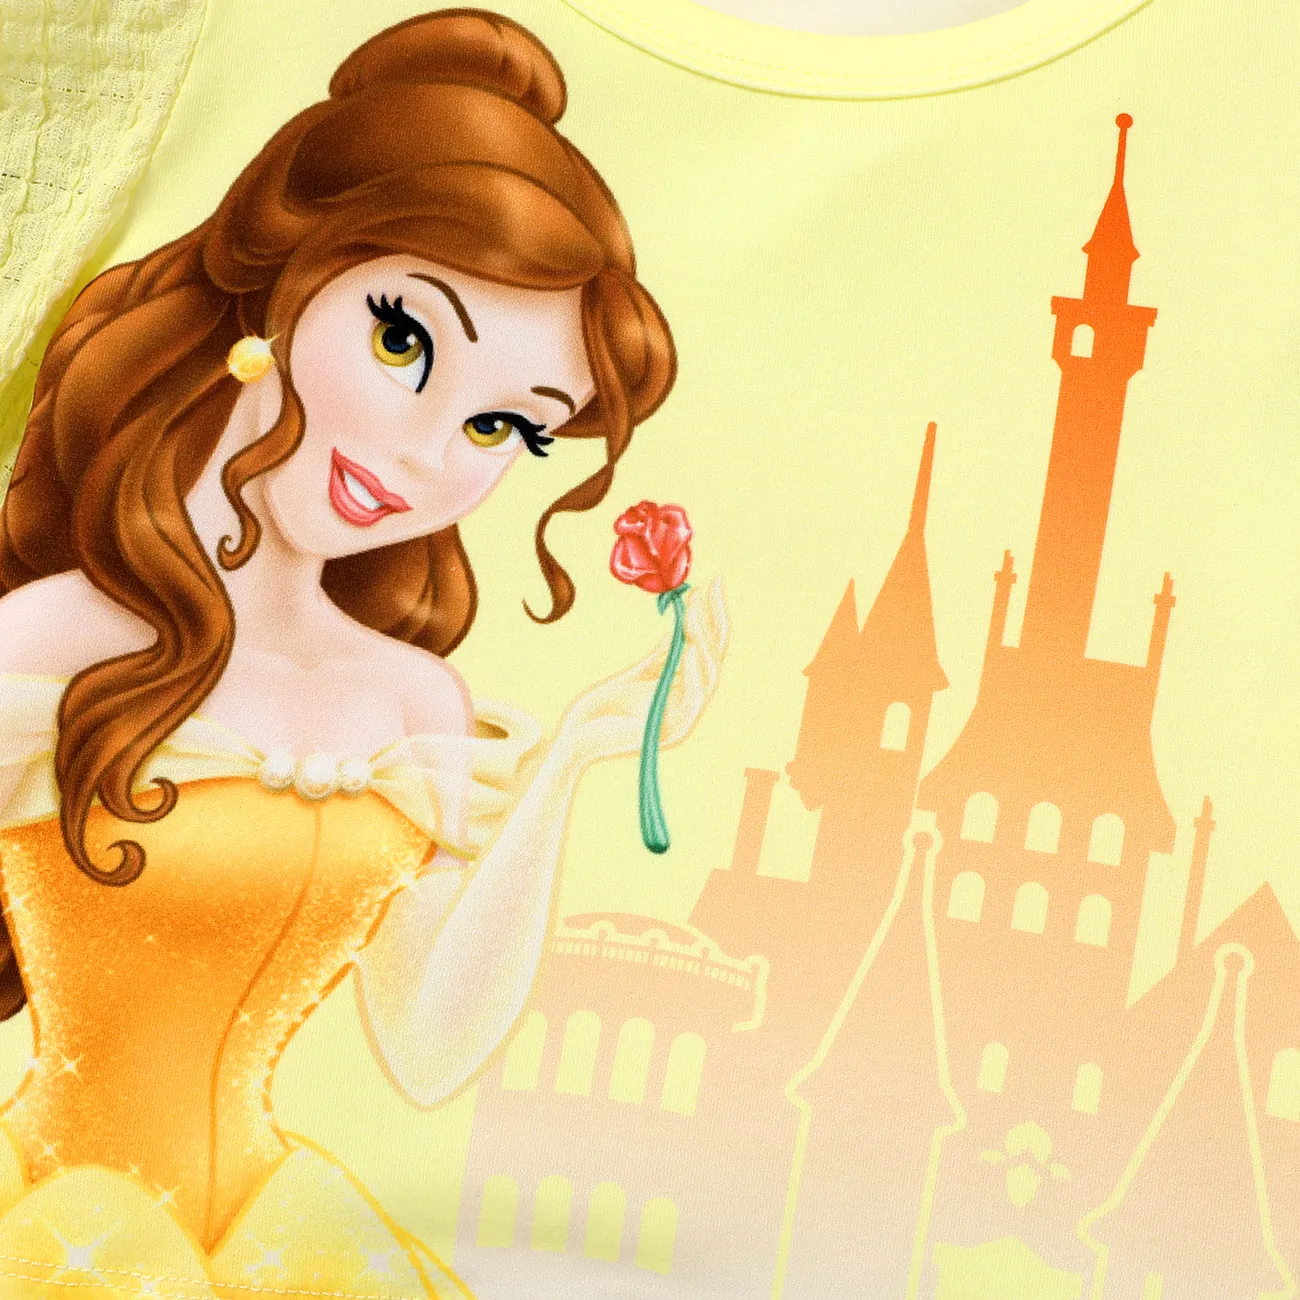 Disney Princess Toddler Girl Character Print Textured Gigot Long Sleeve Tee Yellow big image 1